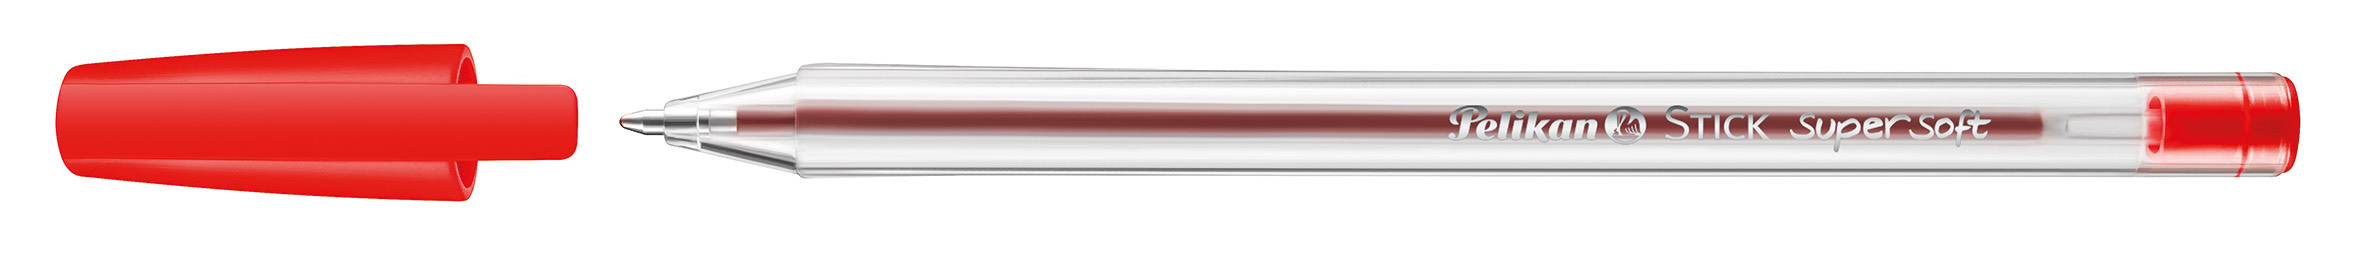 PELIKAN Stylo à bille Stick super 1mm 804394 rouge